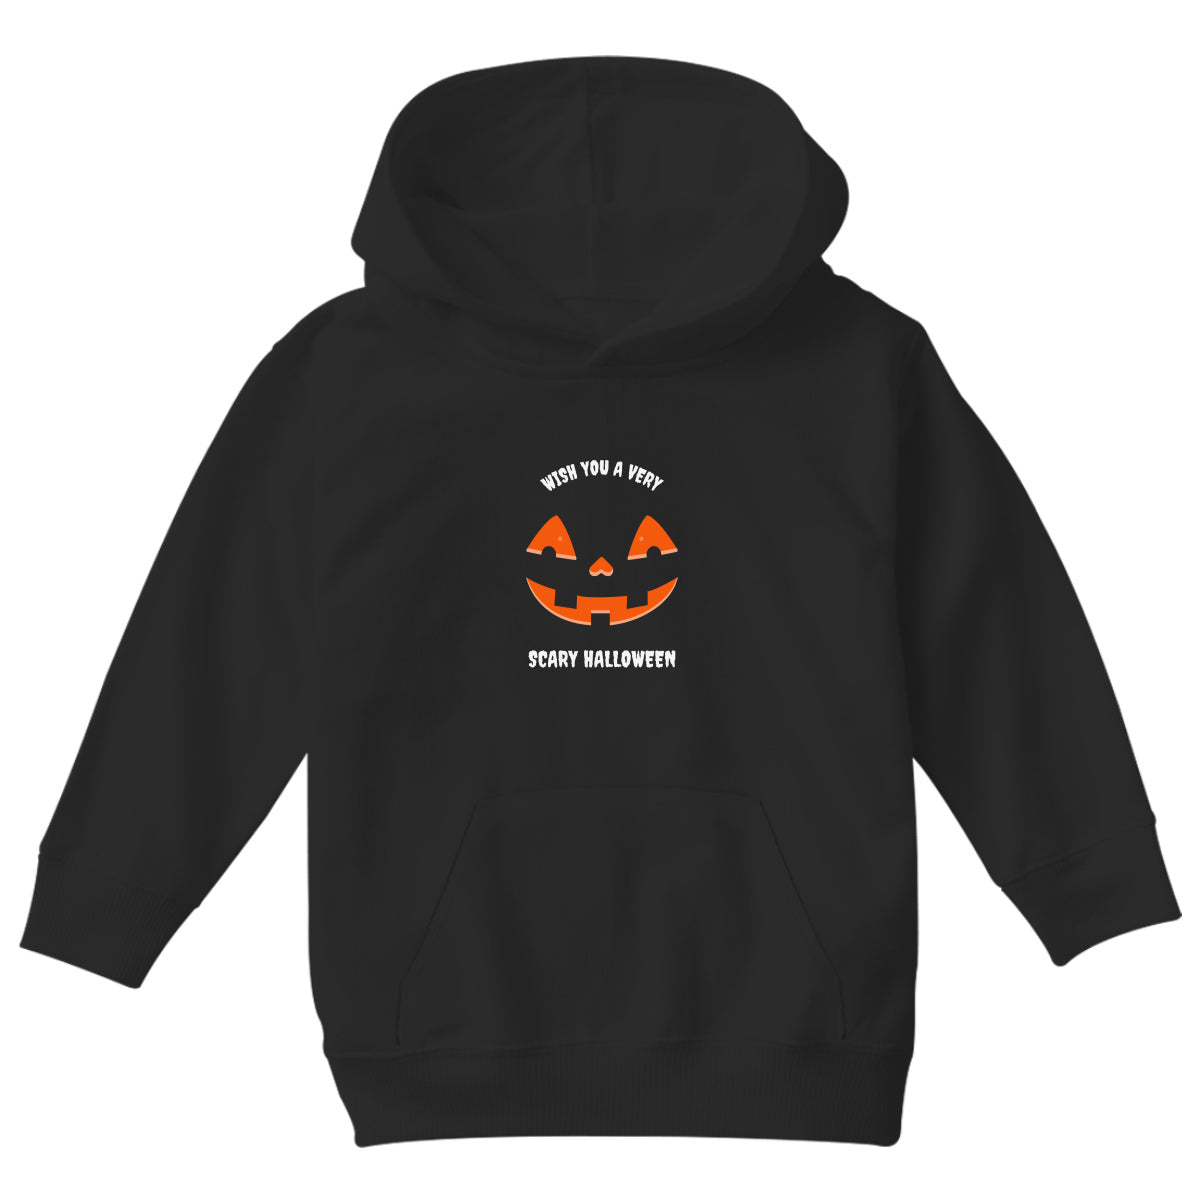 Wish You a Very Scary Halloween Kids Hoodie